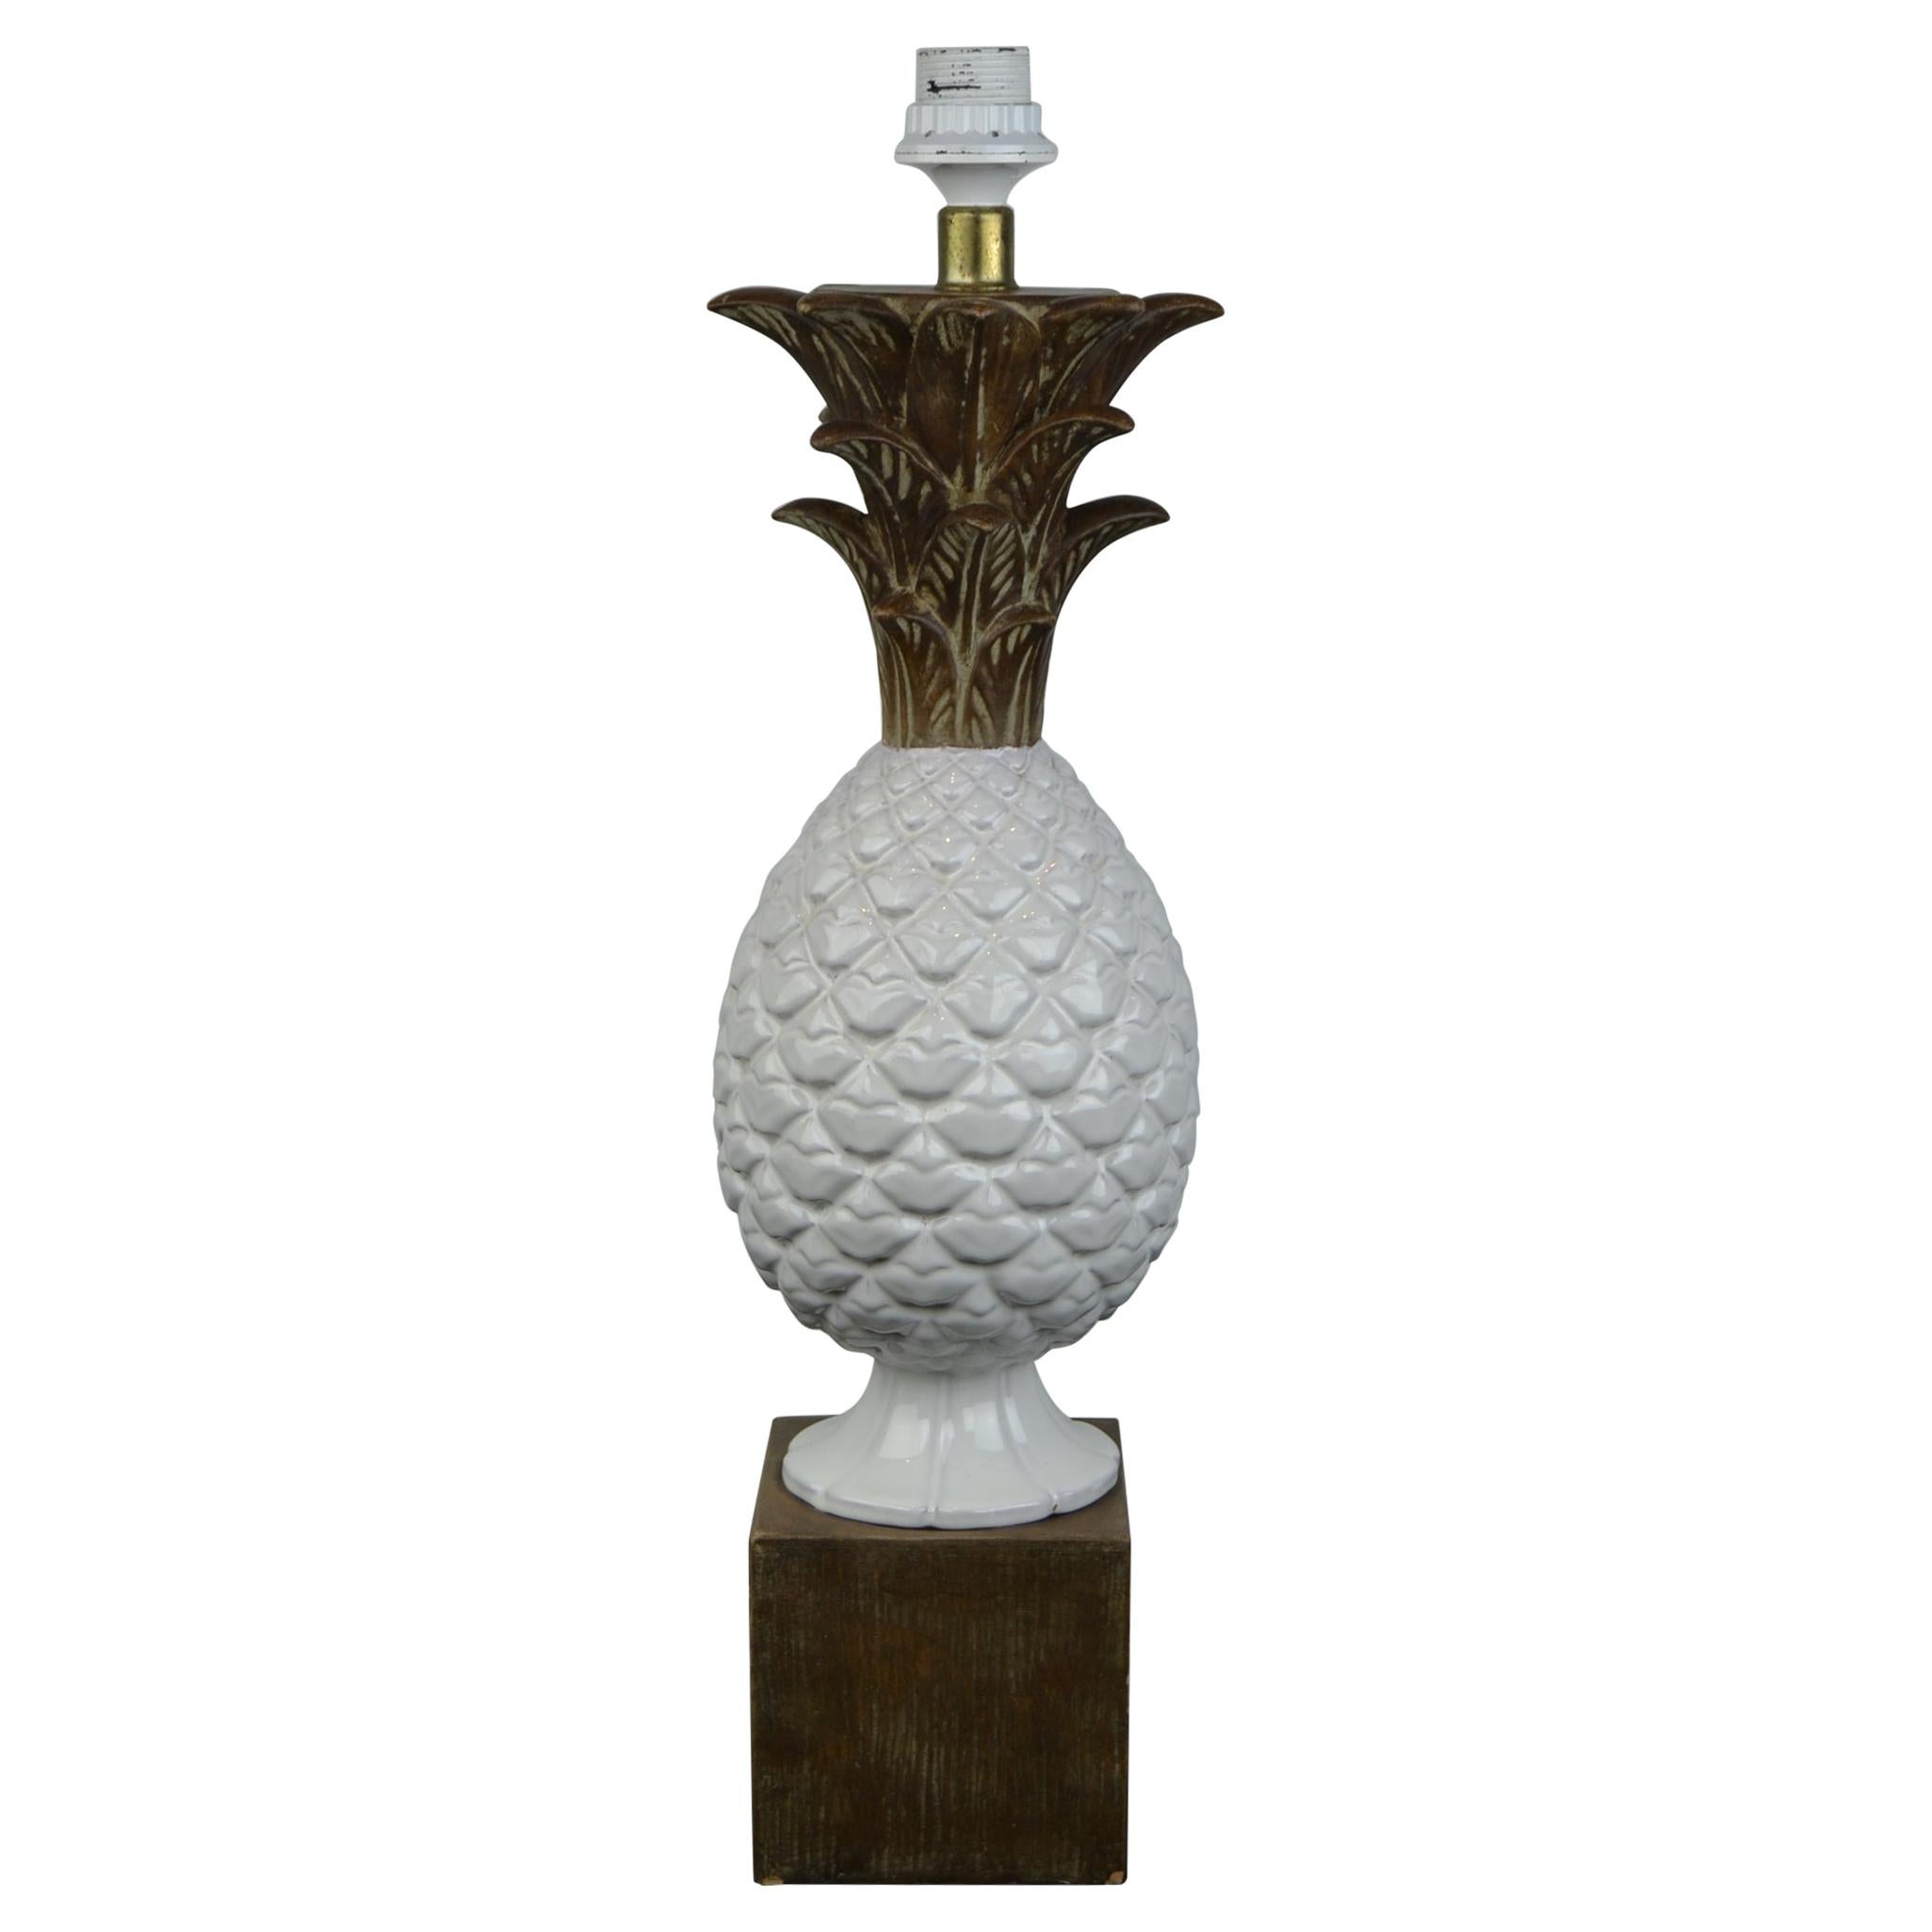 Zaccagnini Ceramic Pineapple Table Lamp, Italy, 1960s